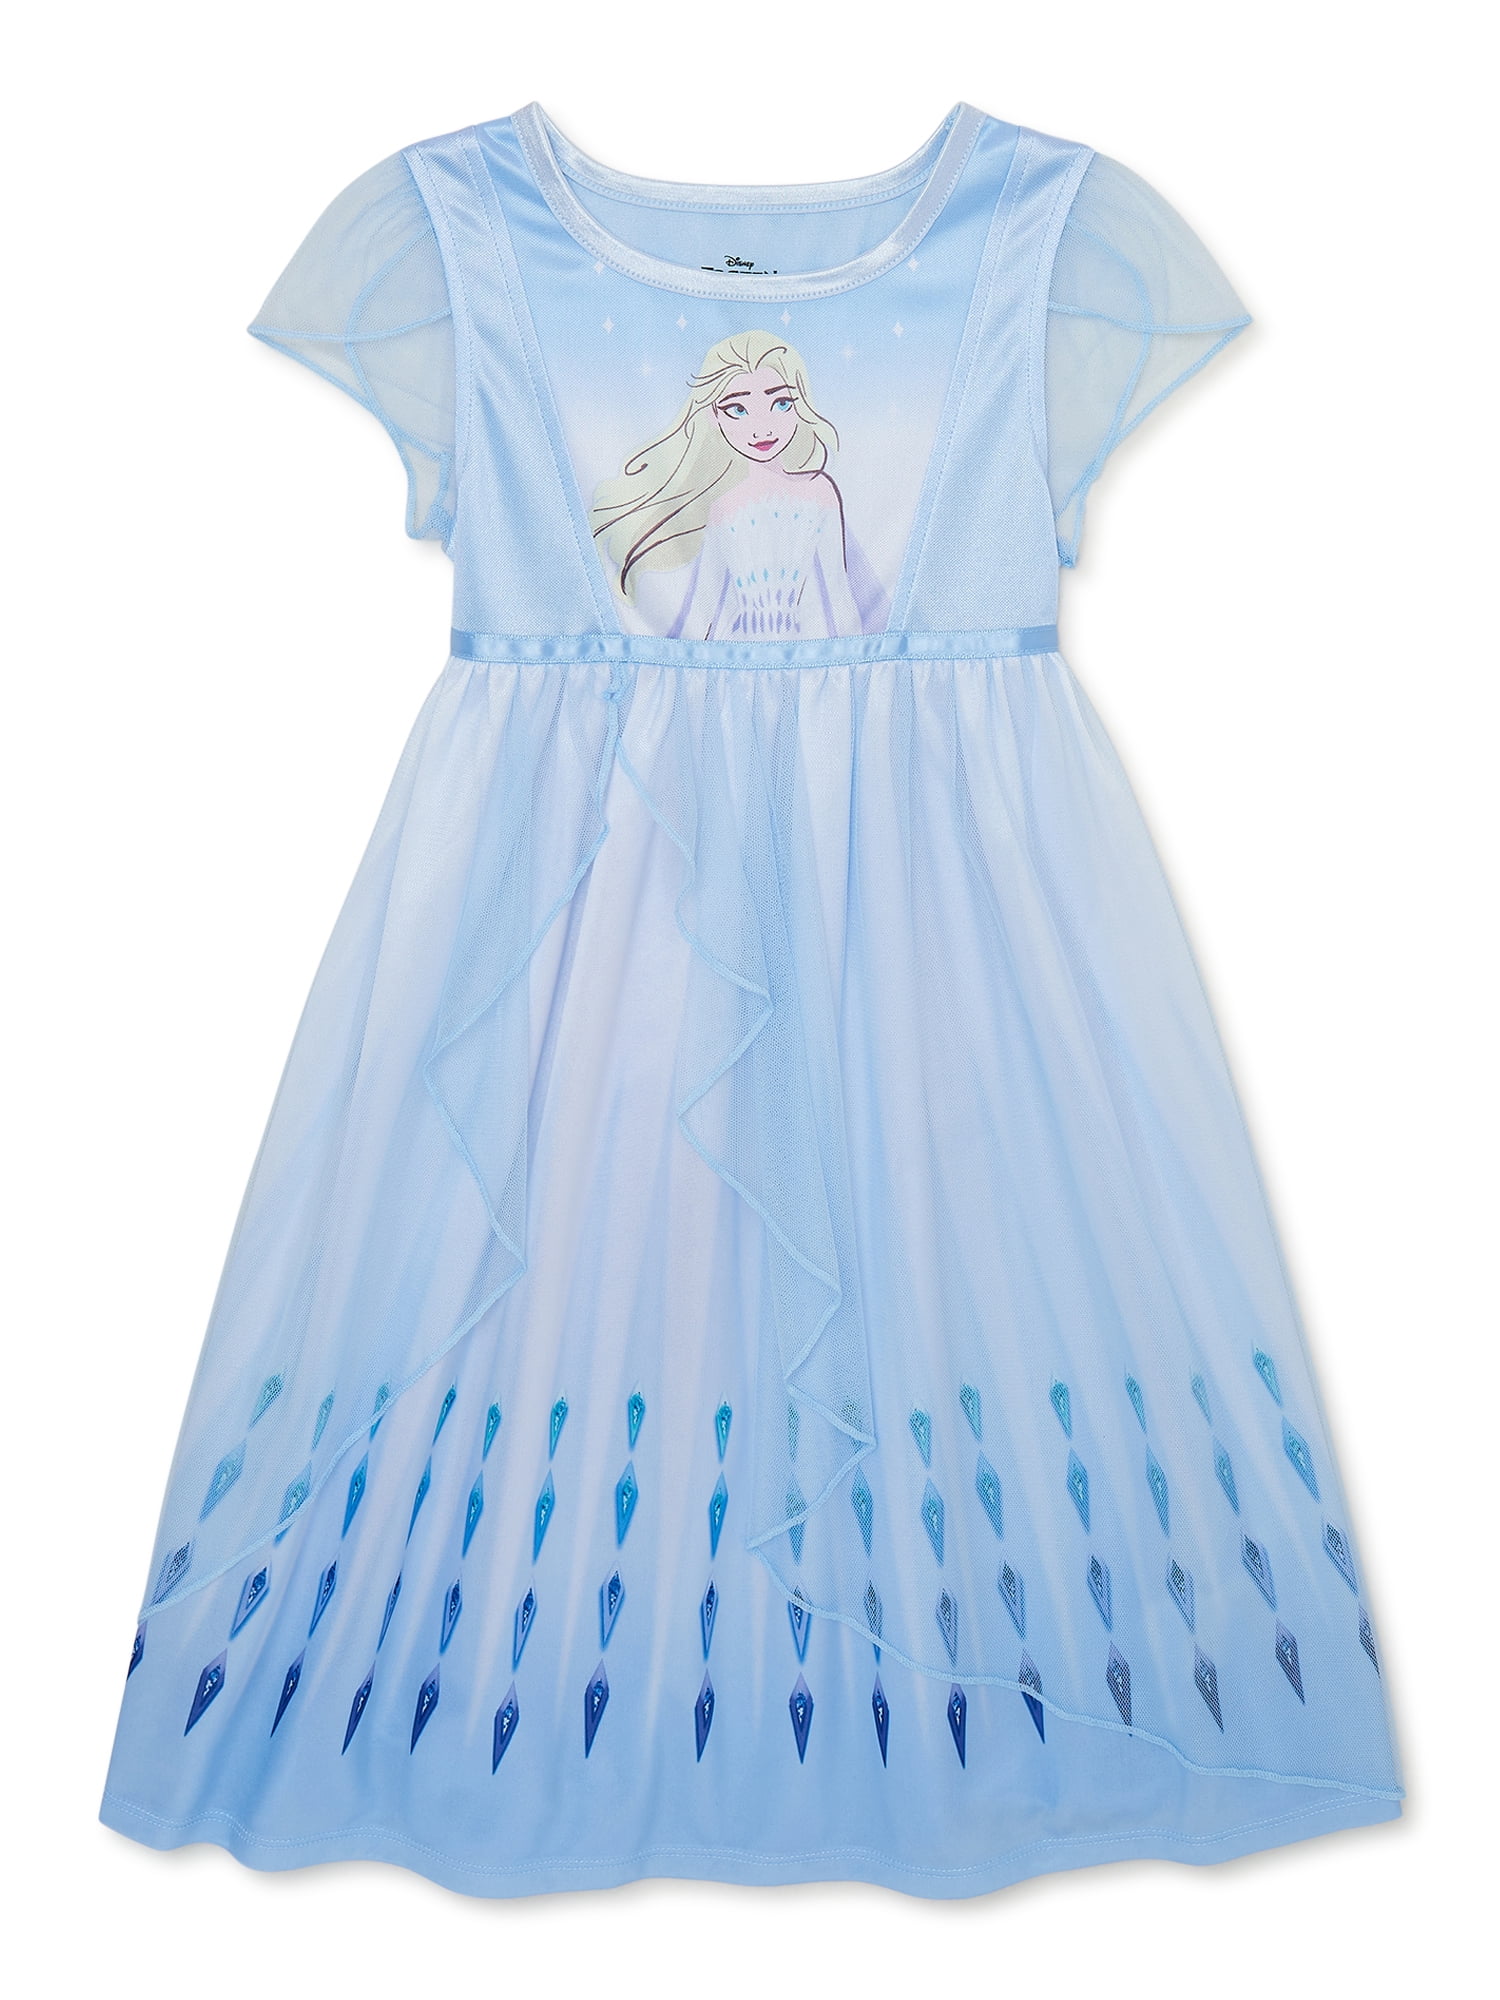 Toddler Girls Fantasy Nightgown, Sizes 2T-5T - Walmart.com